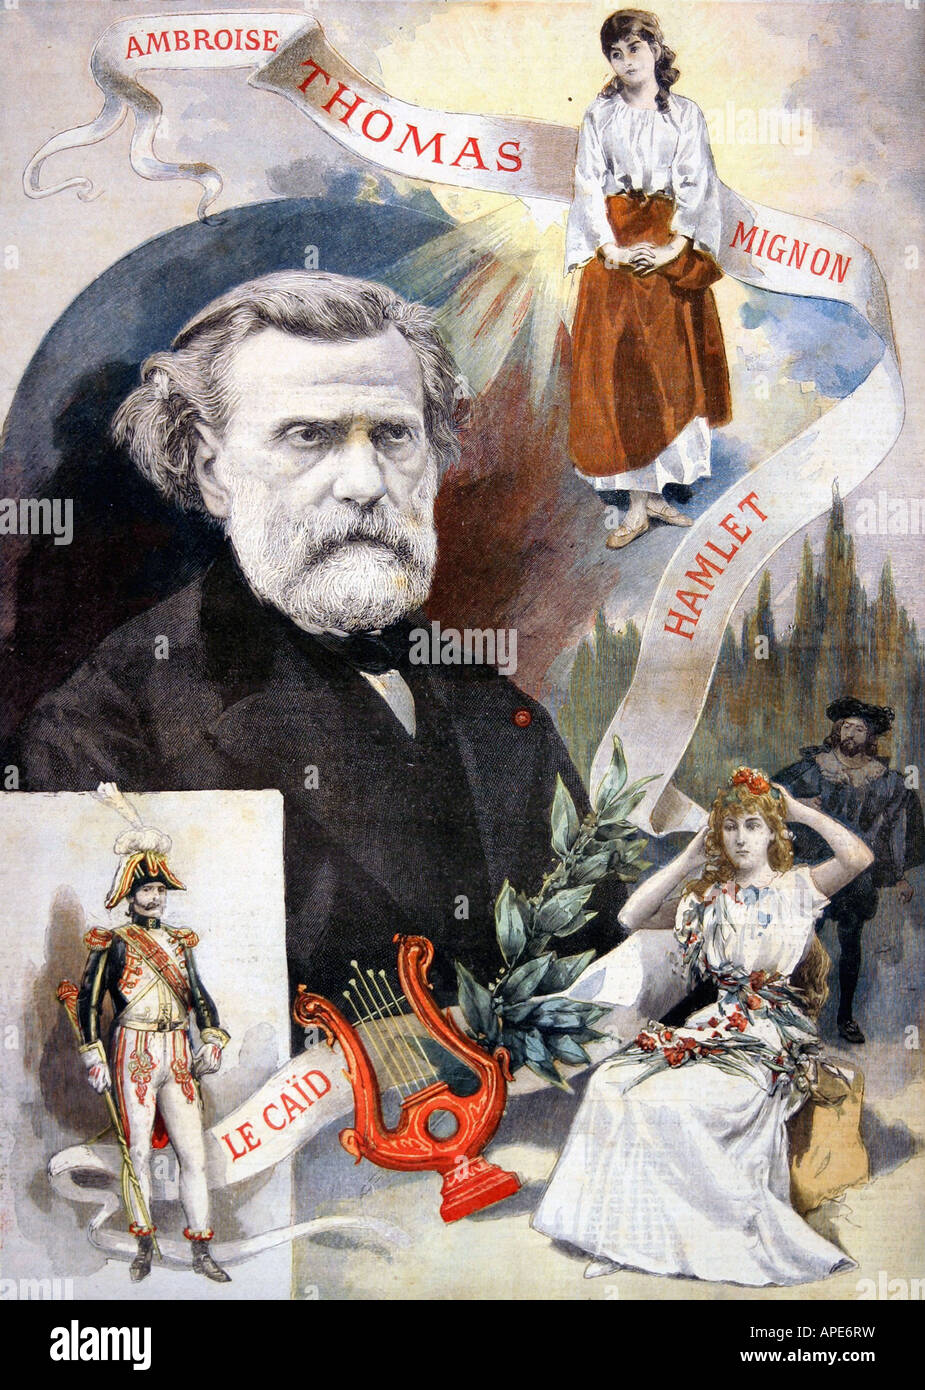 press/media, magazines, 'Le Petit Journal', Paris, 5. volume, number 183, illustrated supplement, Monday 21 May 1894, illustration, 'Ambroise Thomas', Stock Photo